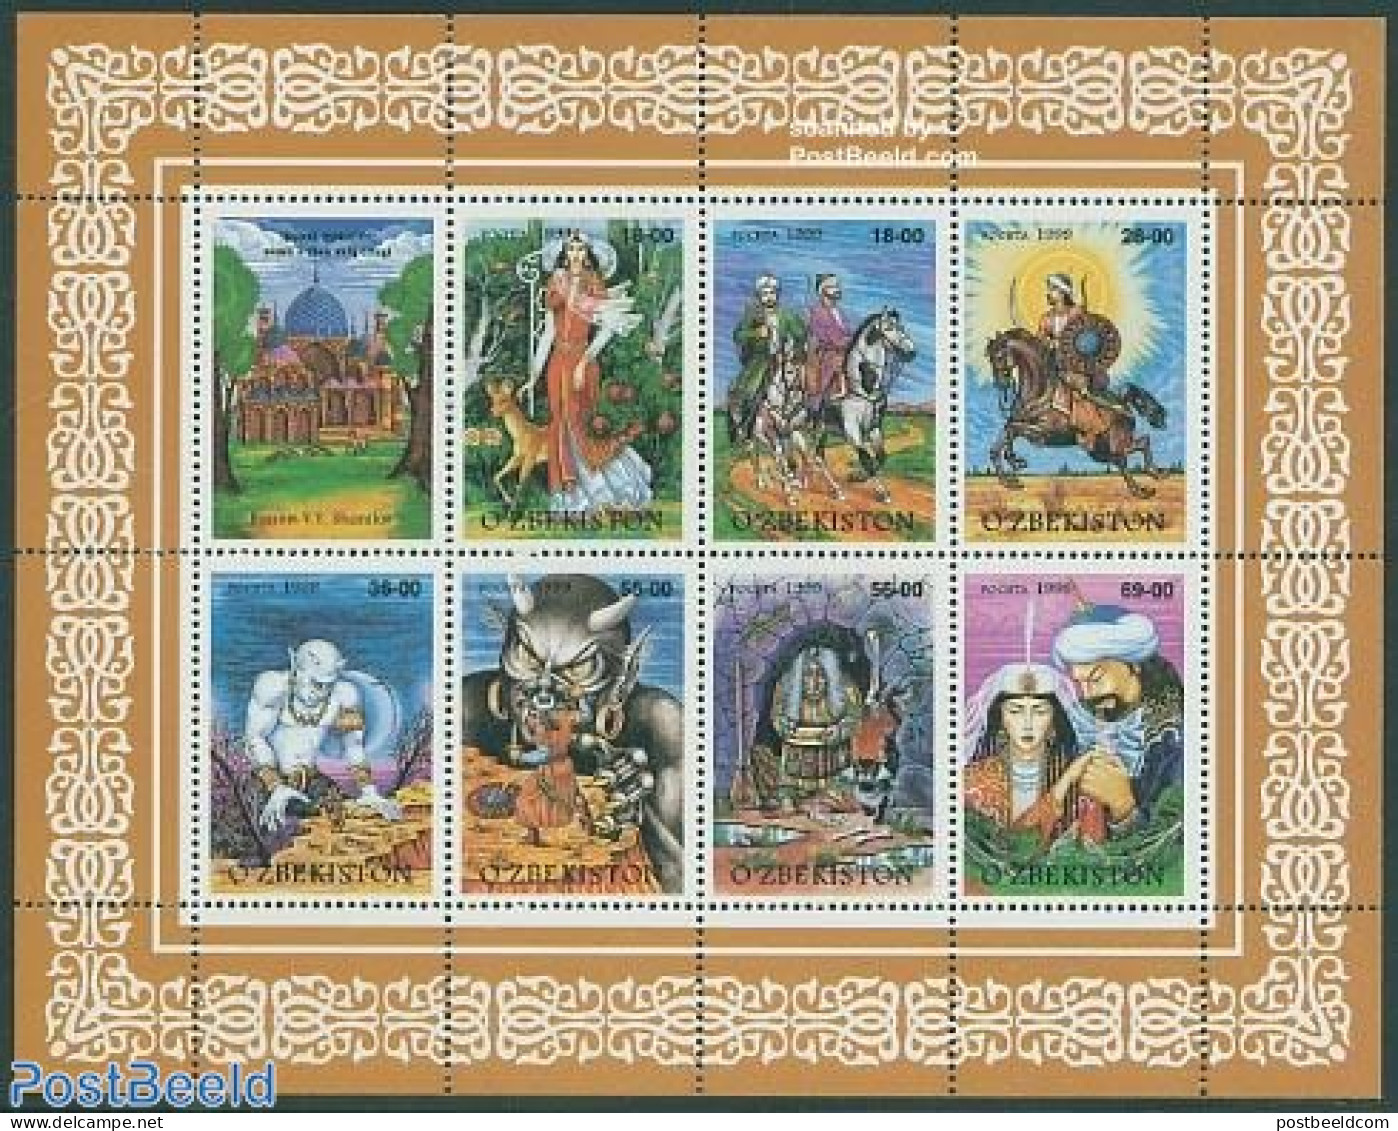 Uzbekistan 1999 Badal Korachi 7v+tab M/s, Mint NH, Art - Fairytales - Contes, Fables & Légendes